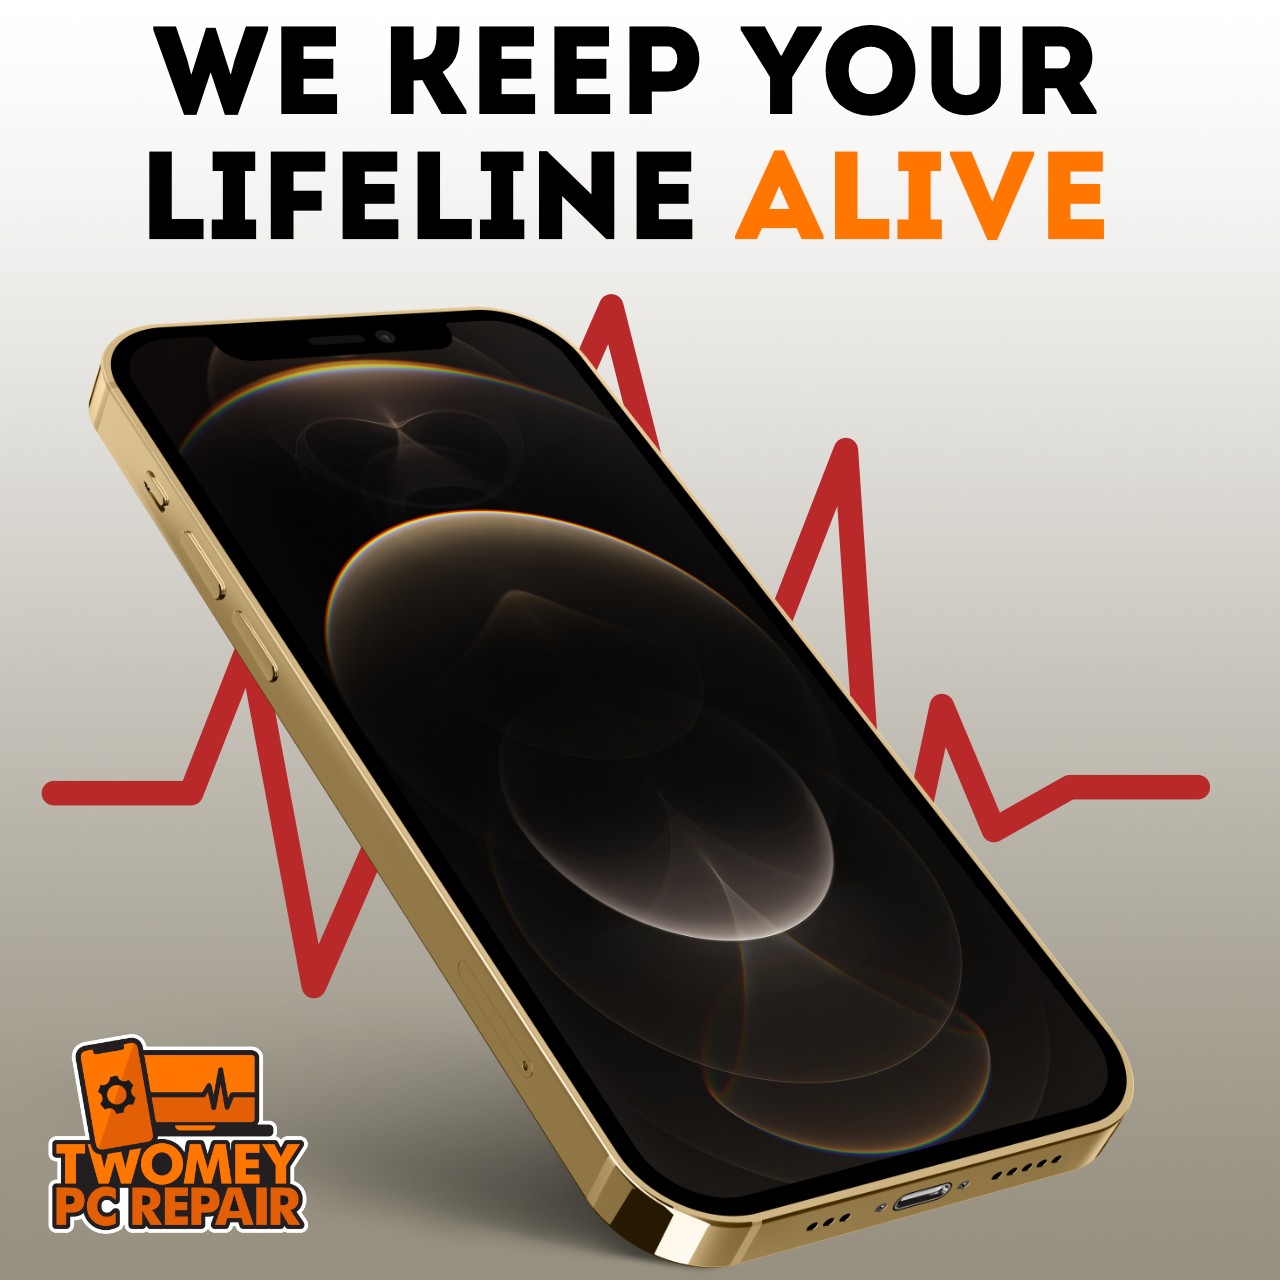 Keep your lifeline alive.